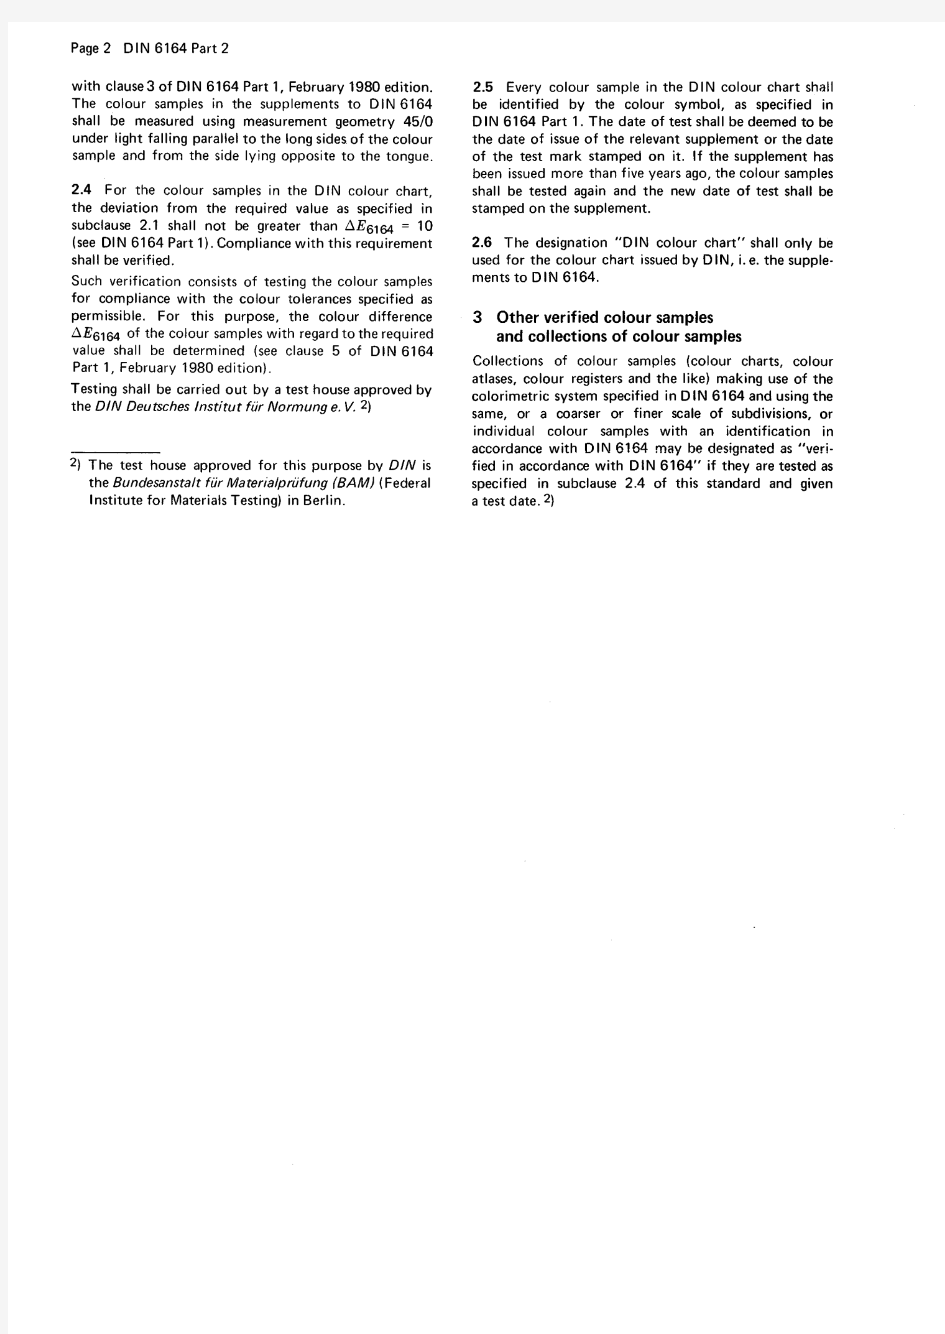 DIN 6164-2-1980 西德工业标准比色图表、颜色样品的规定